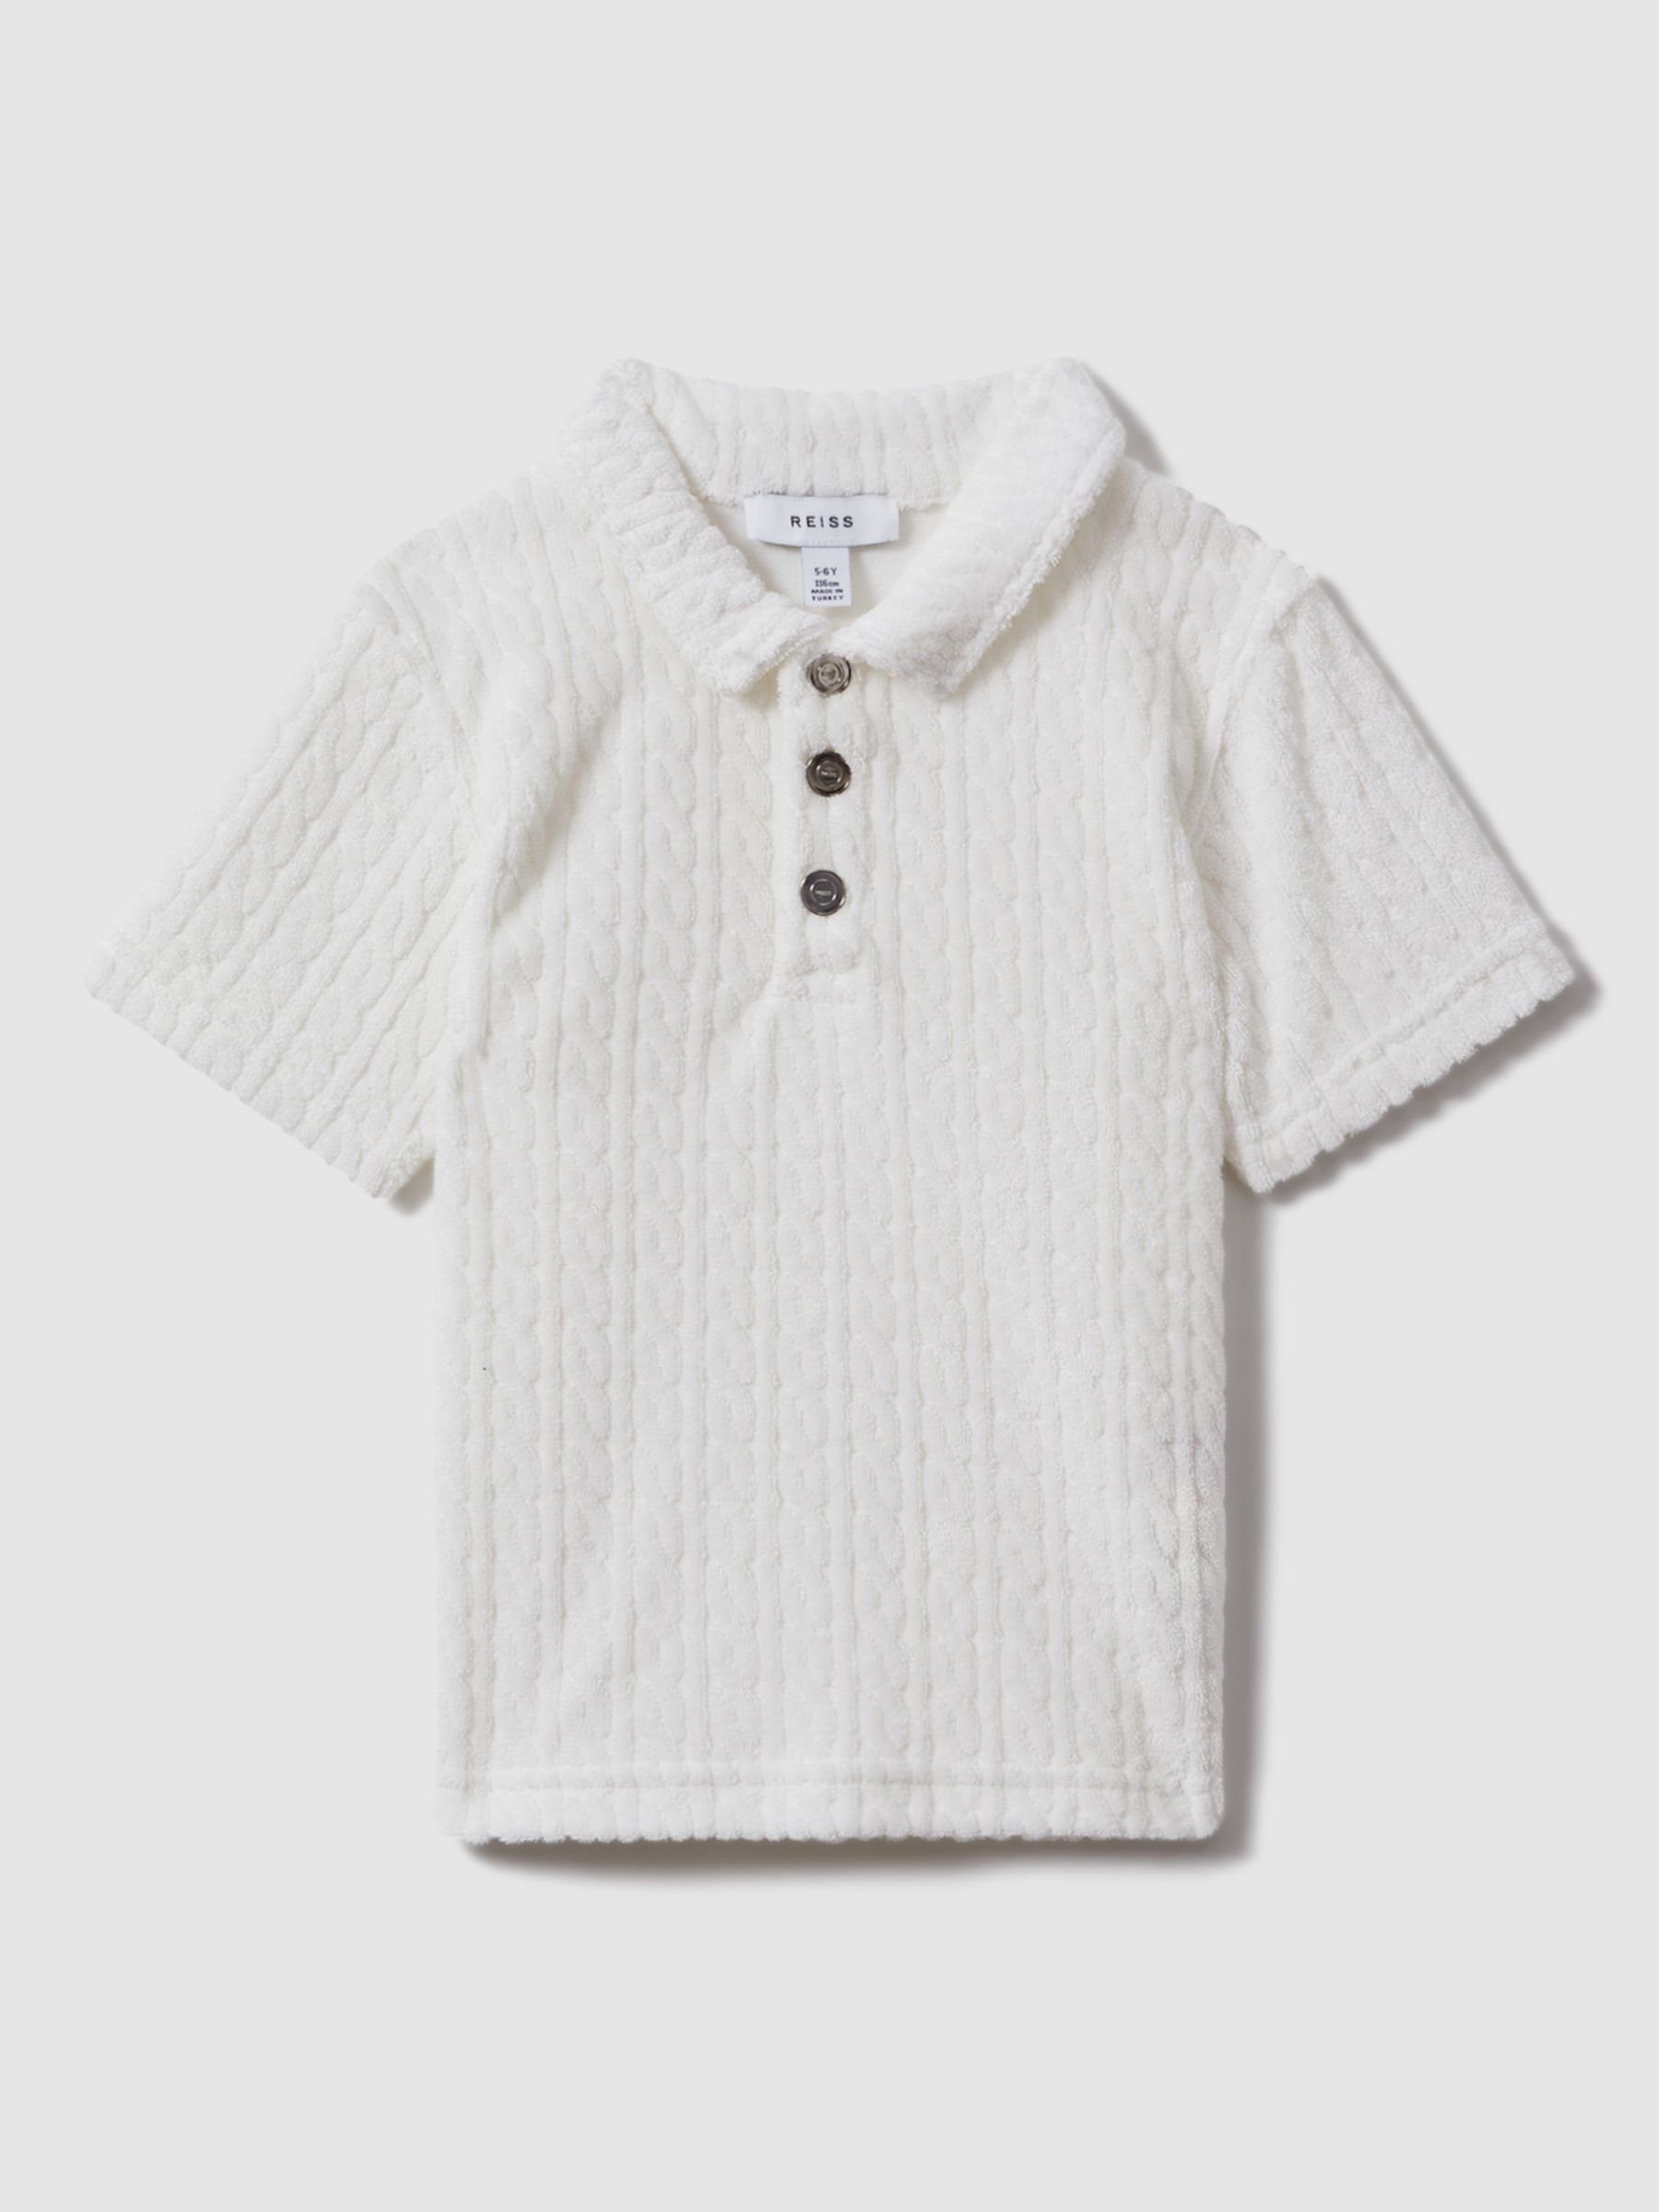 Reiss Kids' Iggy Press Stud Velour Polo Shirt, White, 3-4 years